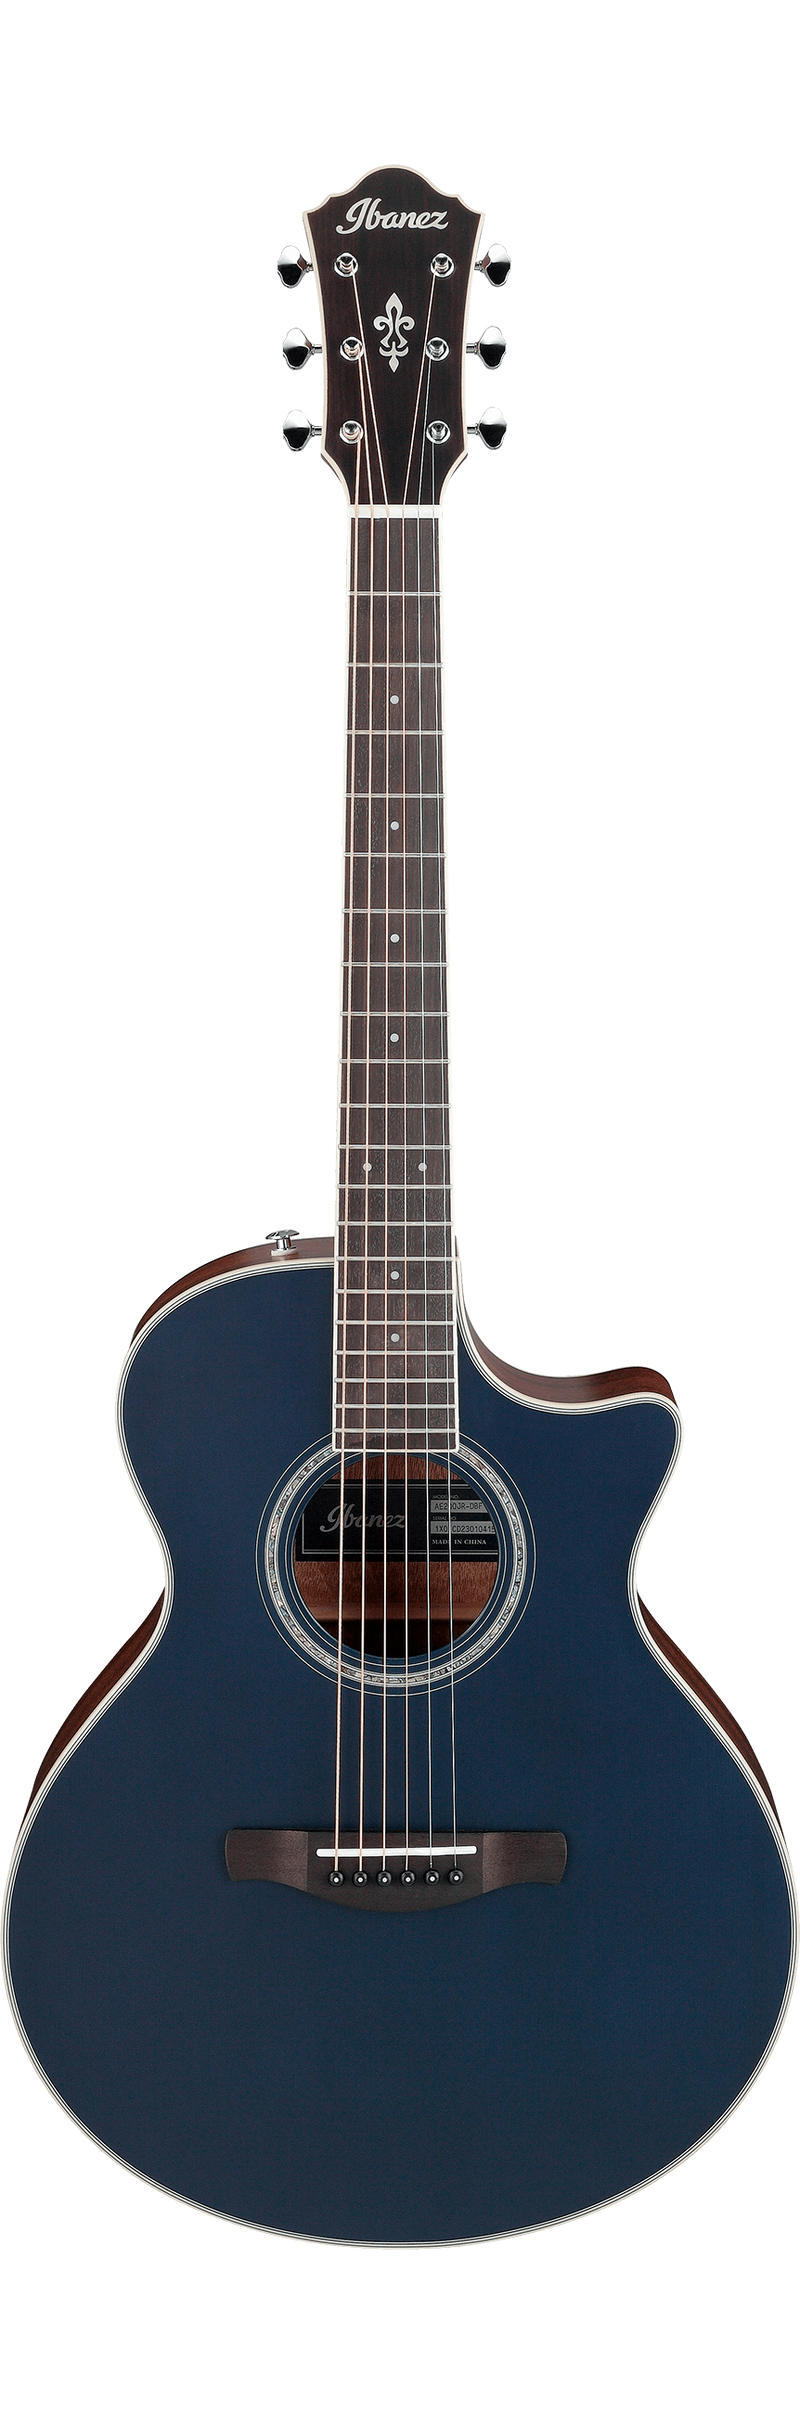 Ibanez AE200JR Acoustic Guitar (Dark Tide Blue Flat)